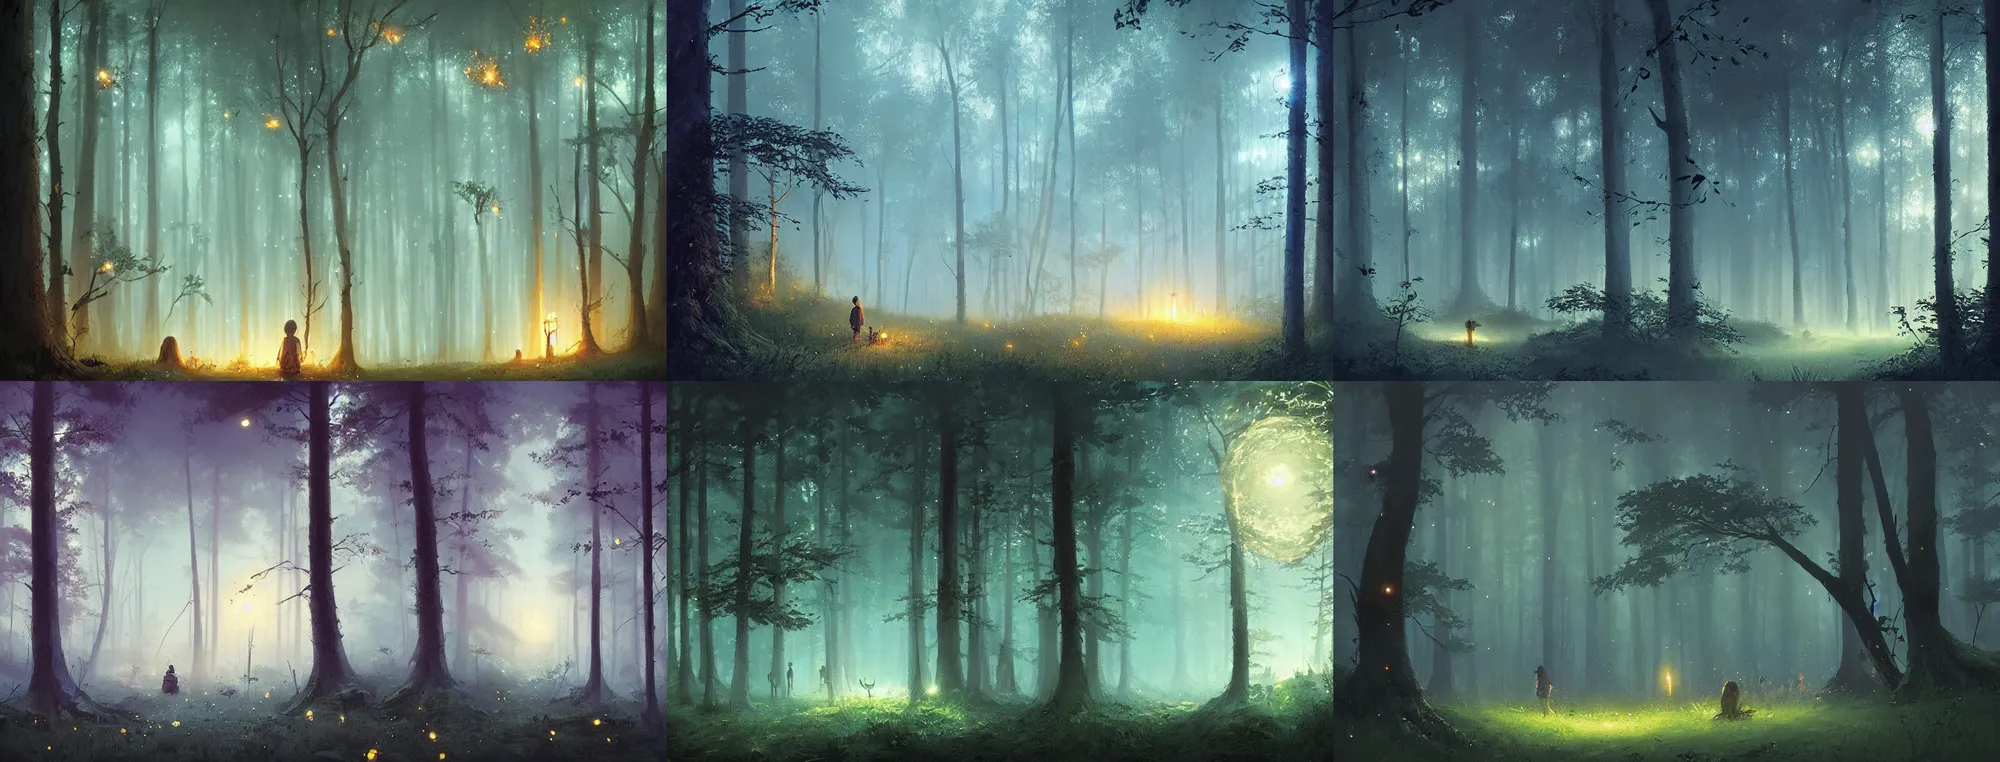 Prompt: forest with fireflies, fog, magical, night, dark, blue, by darek zabrocki and studio ghibli, artstation